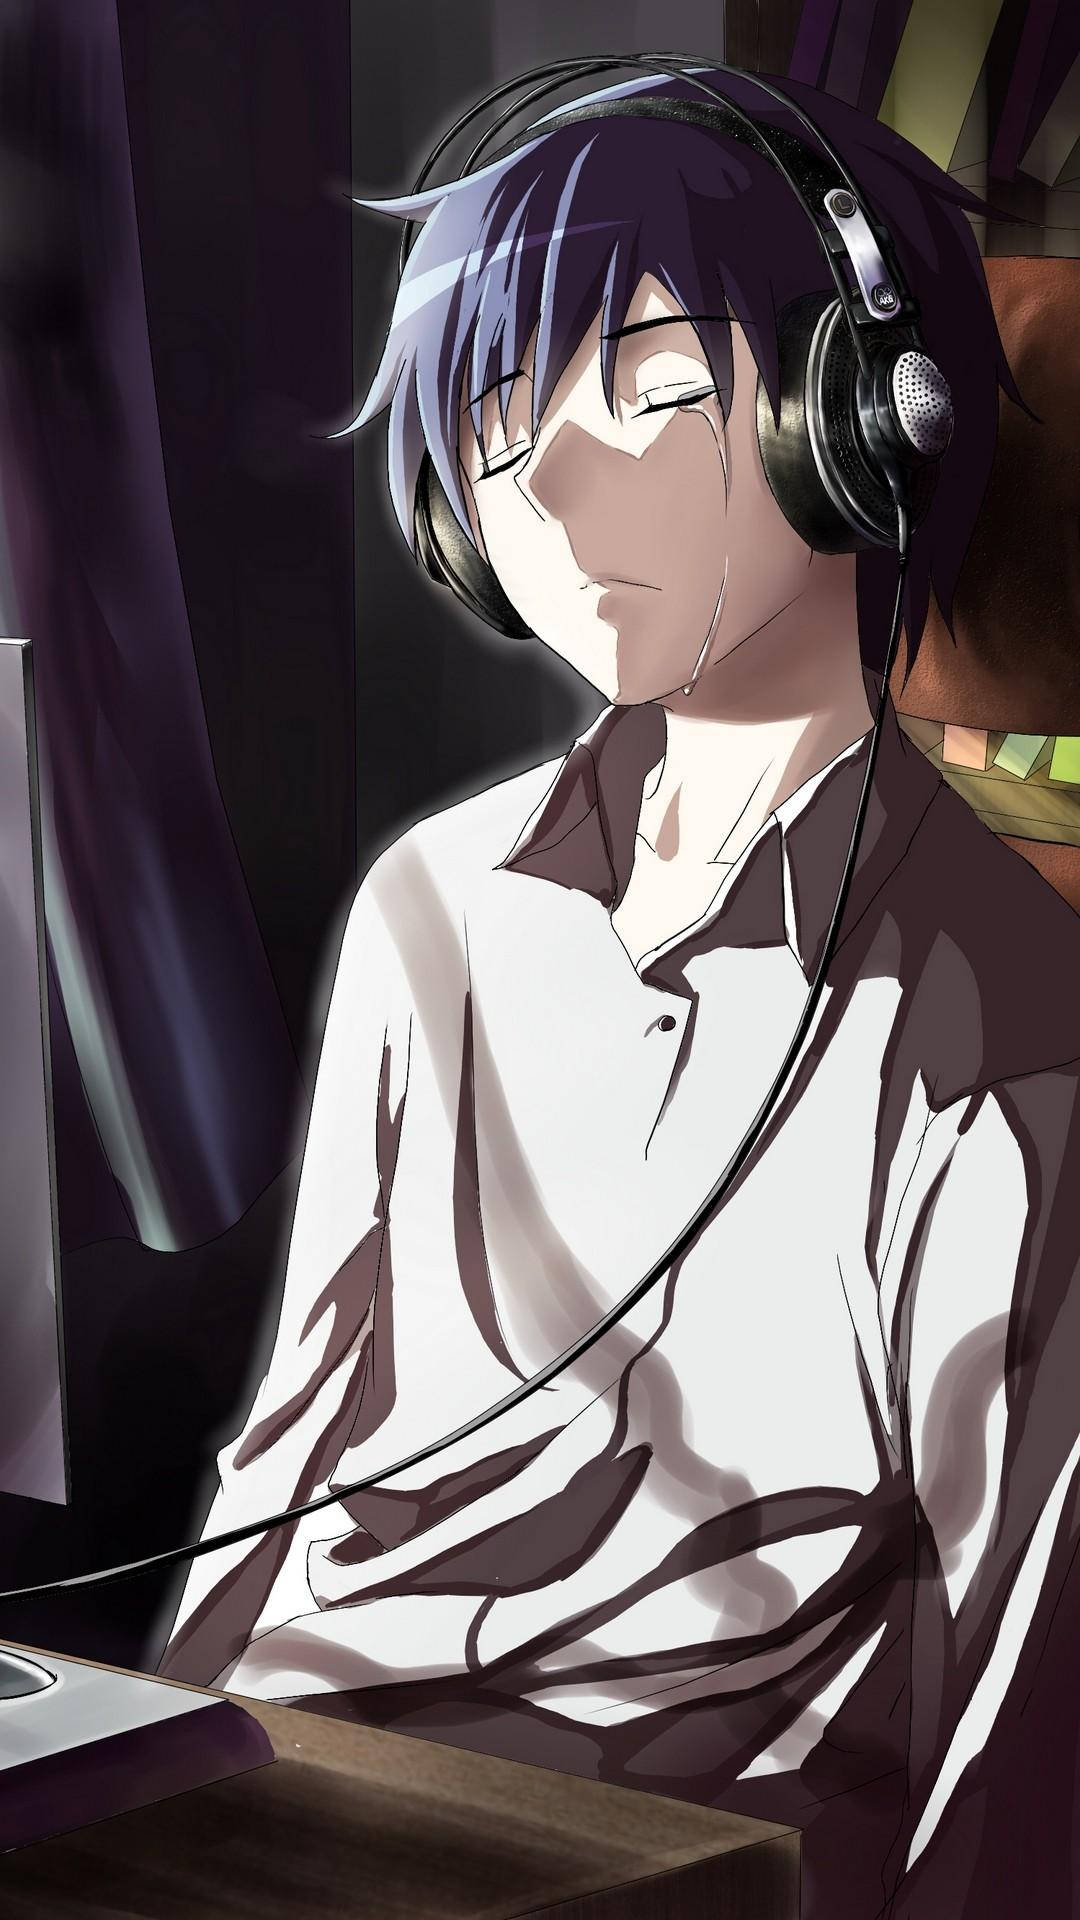 1080x1920 Download Sad Anime Boy With Headphones Wallpaper